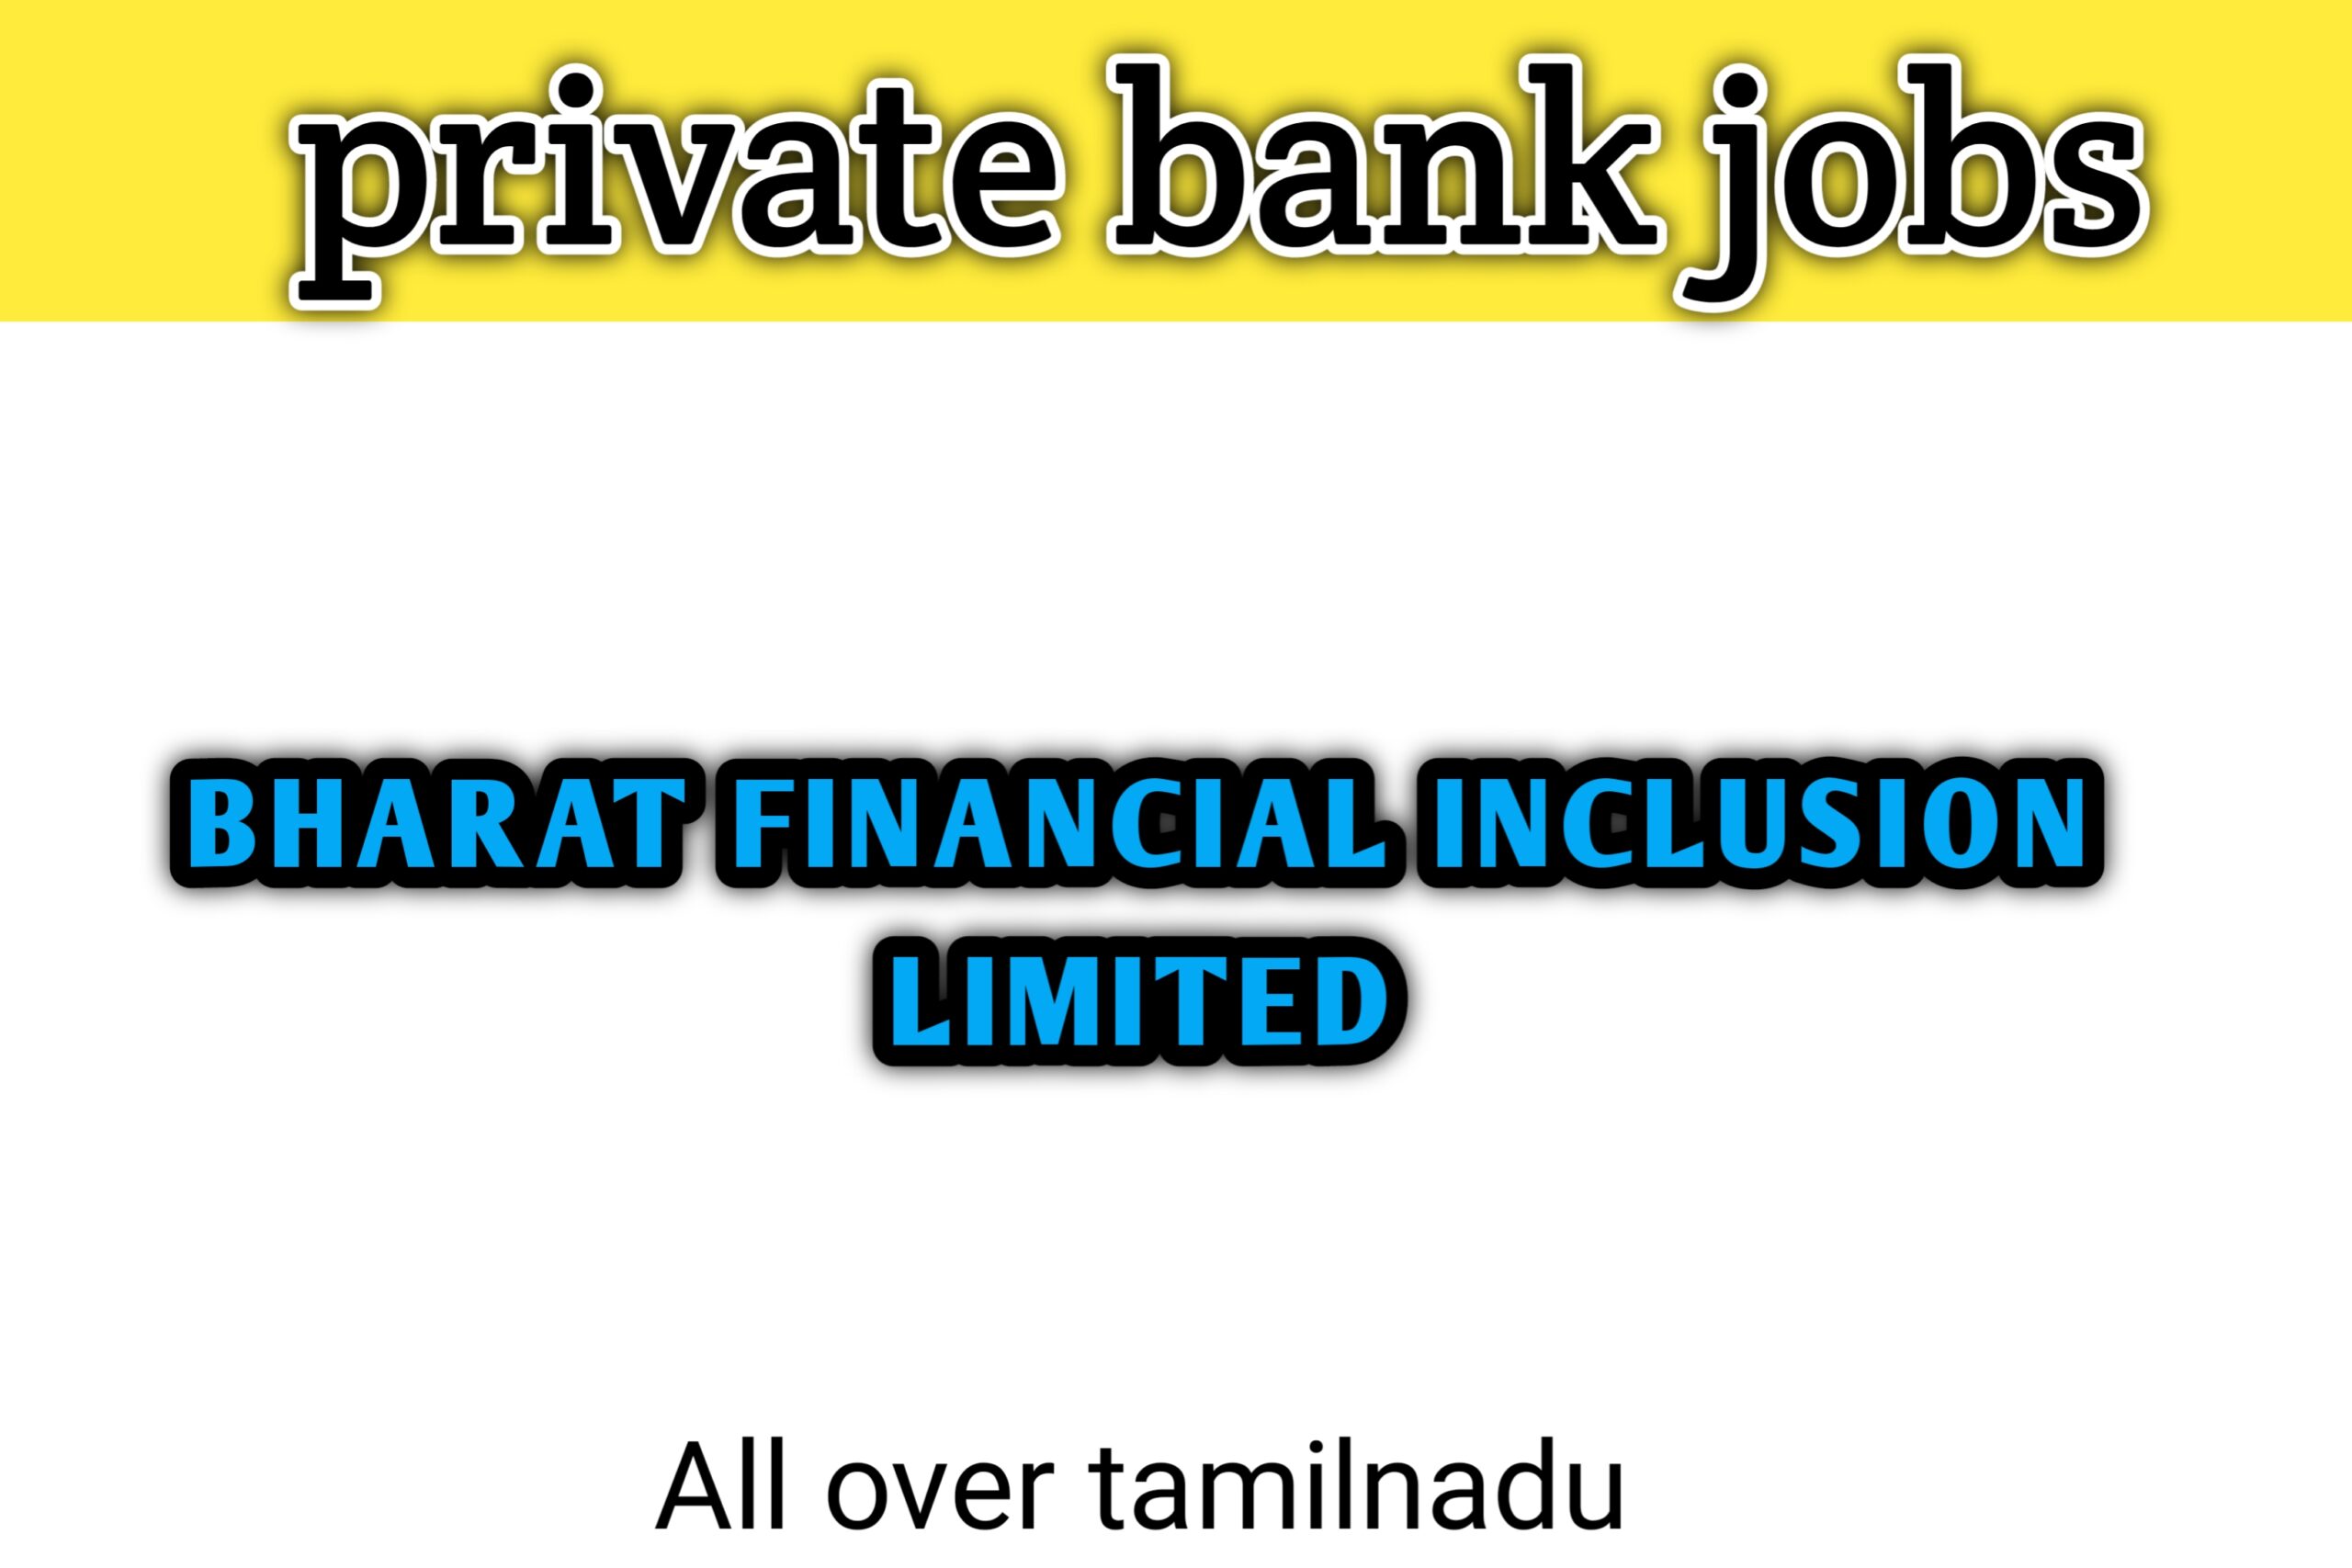 Tamilnadu job openings for freshers